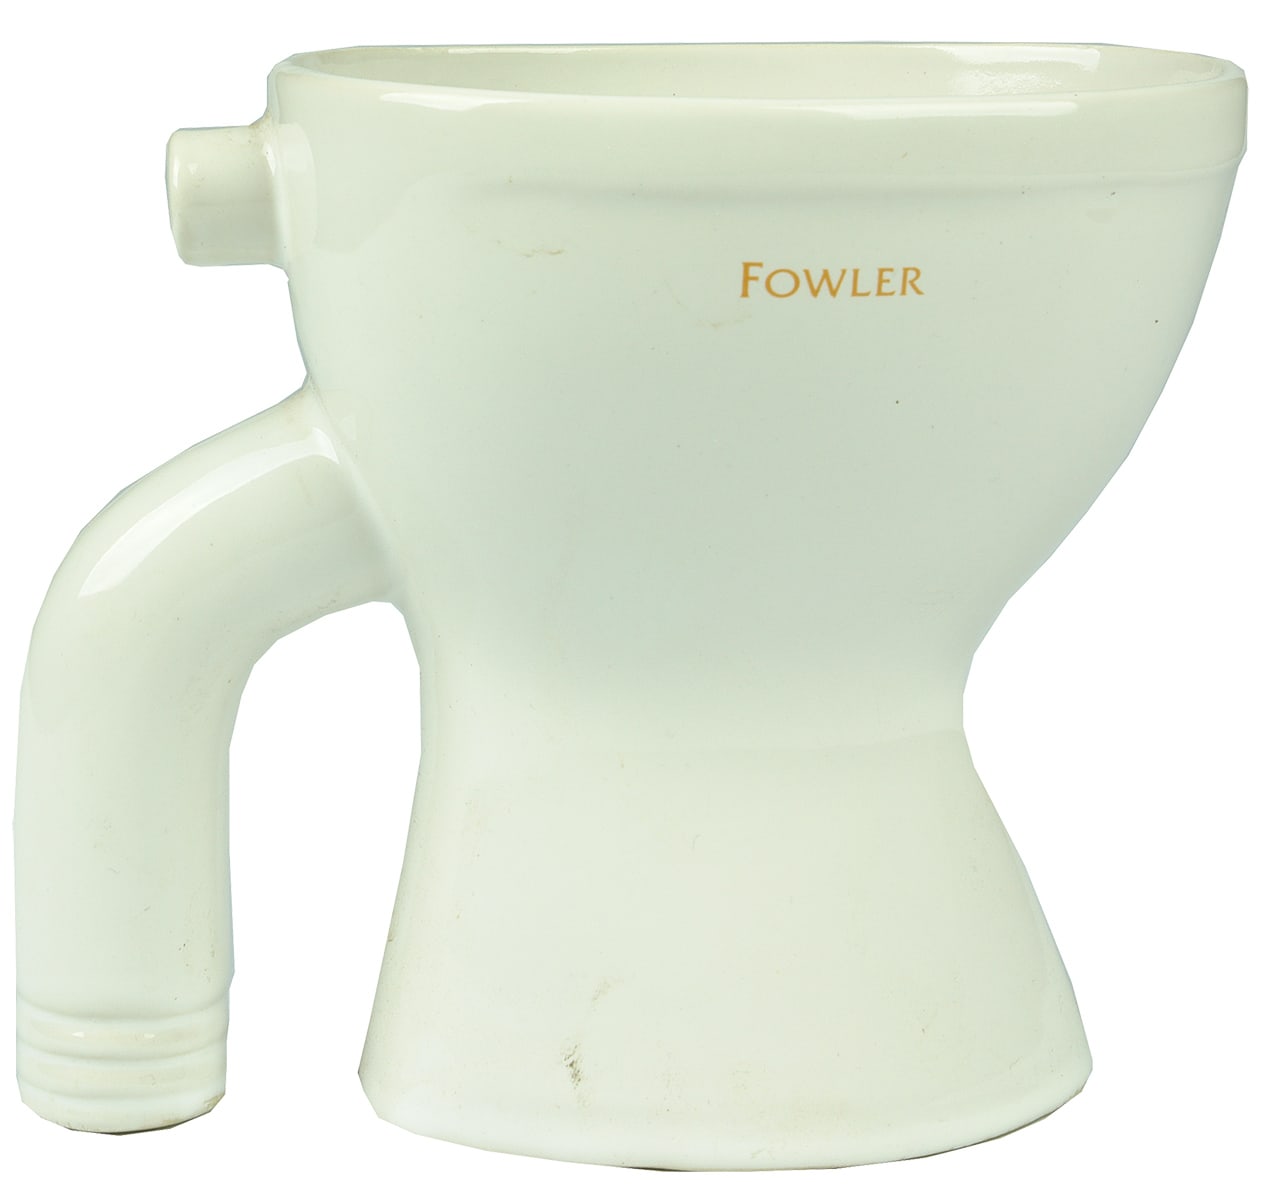 Fowler Toilet Bowl Salesmans Sample